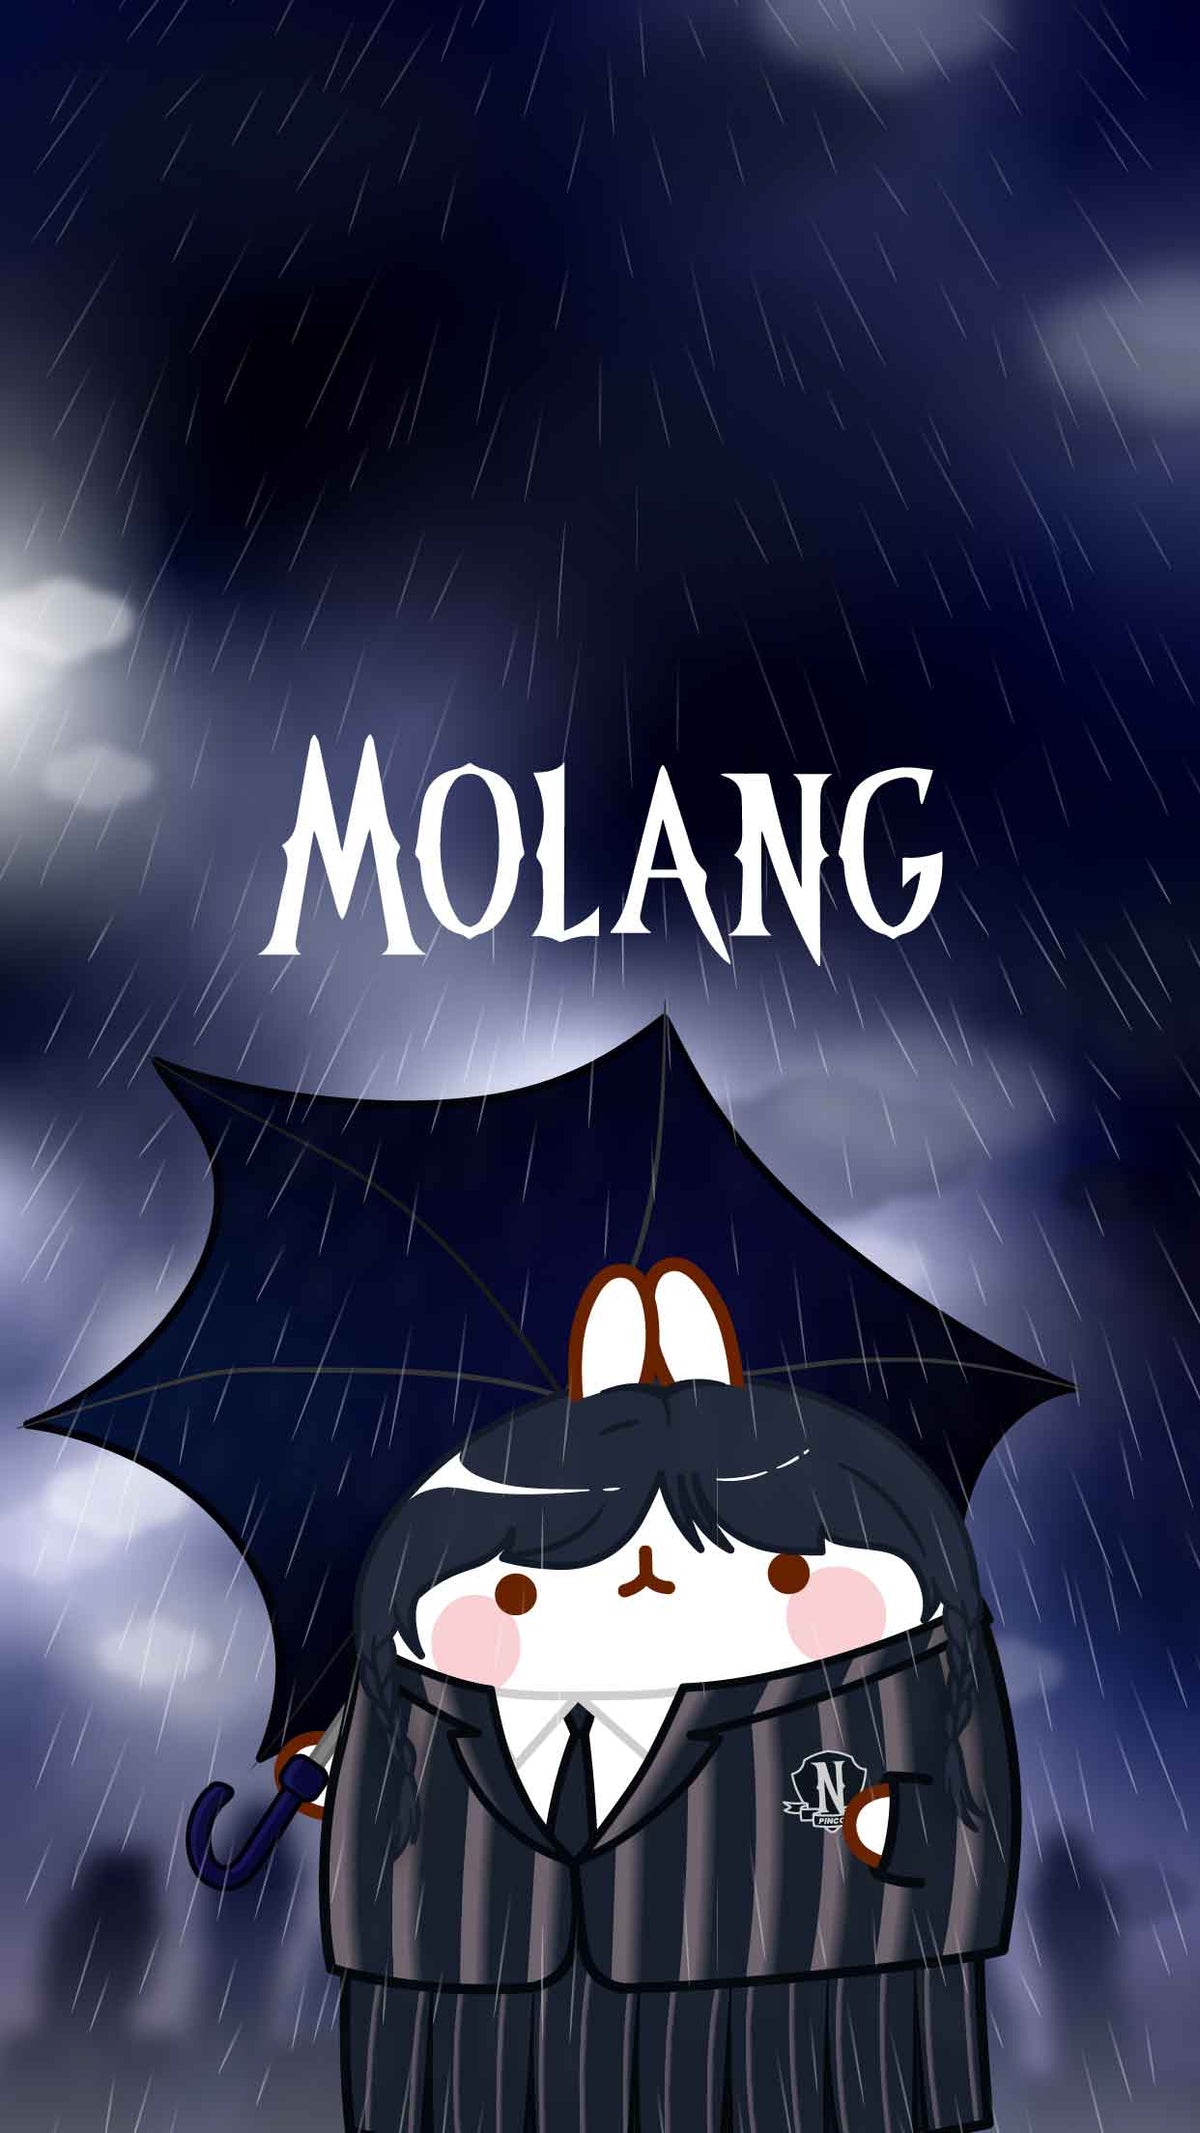 Molang Parody Wallpapers: Discover The Among Us Wallpaper of Molang